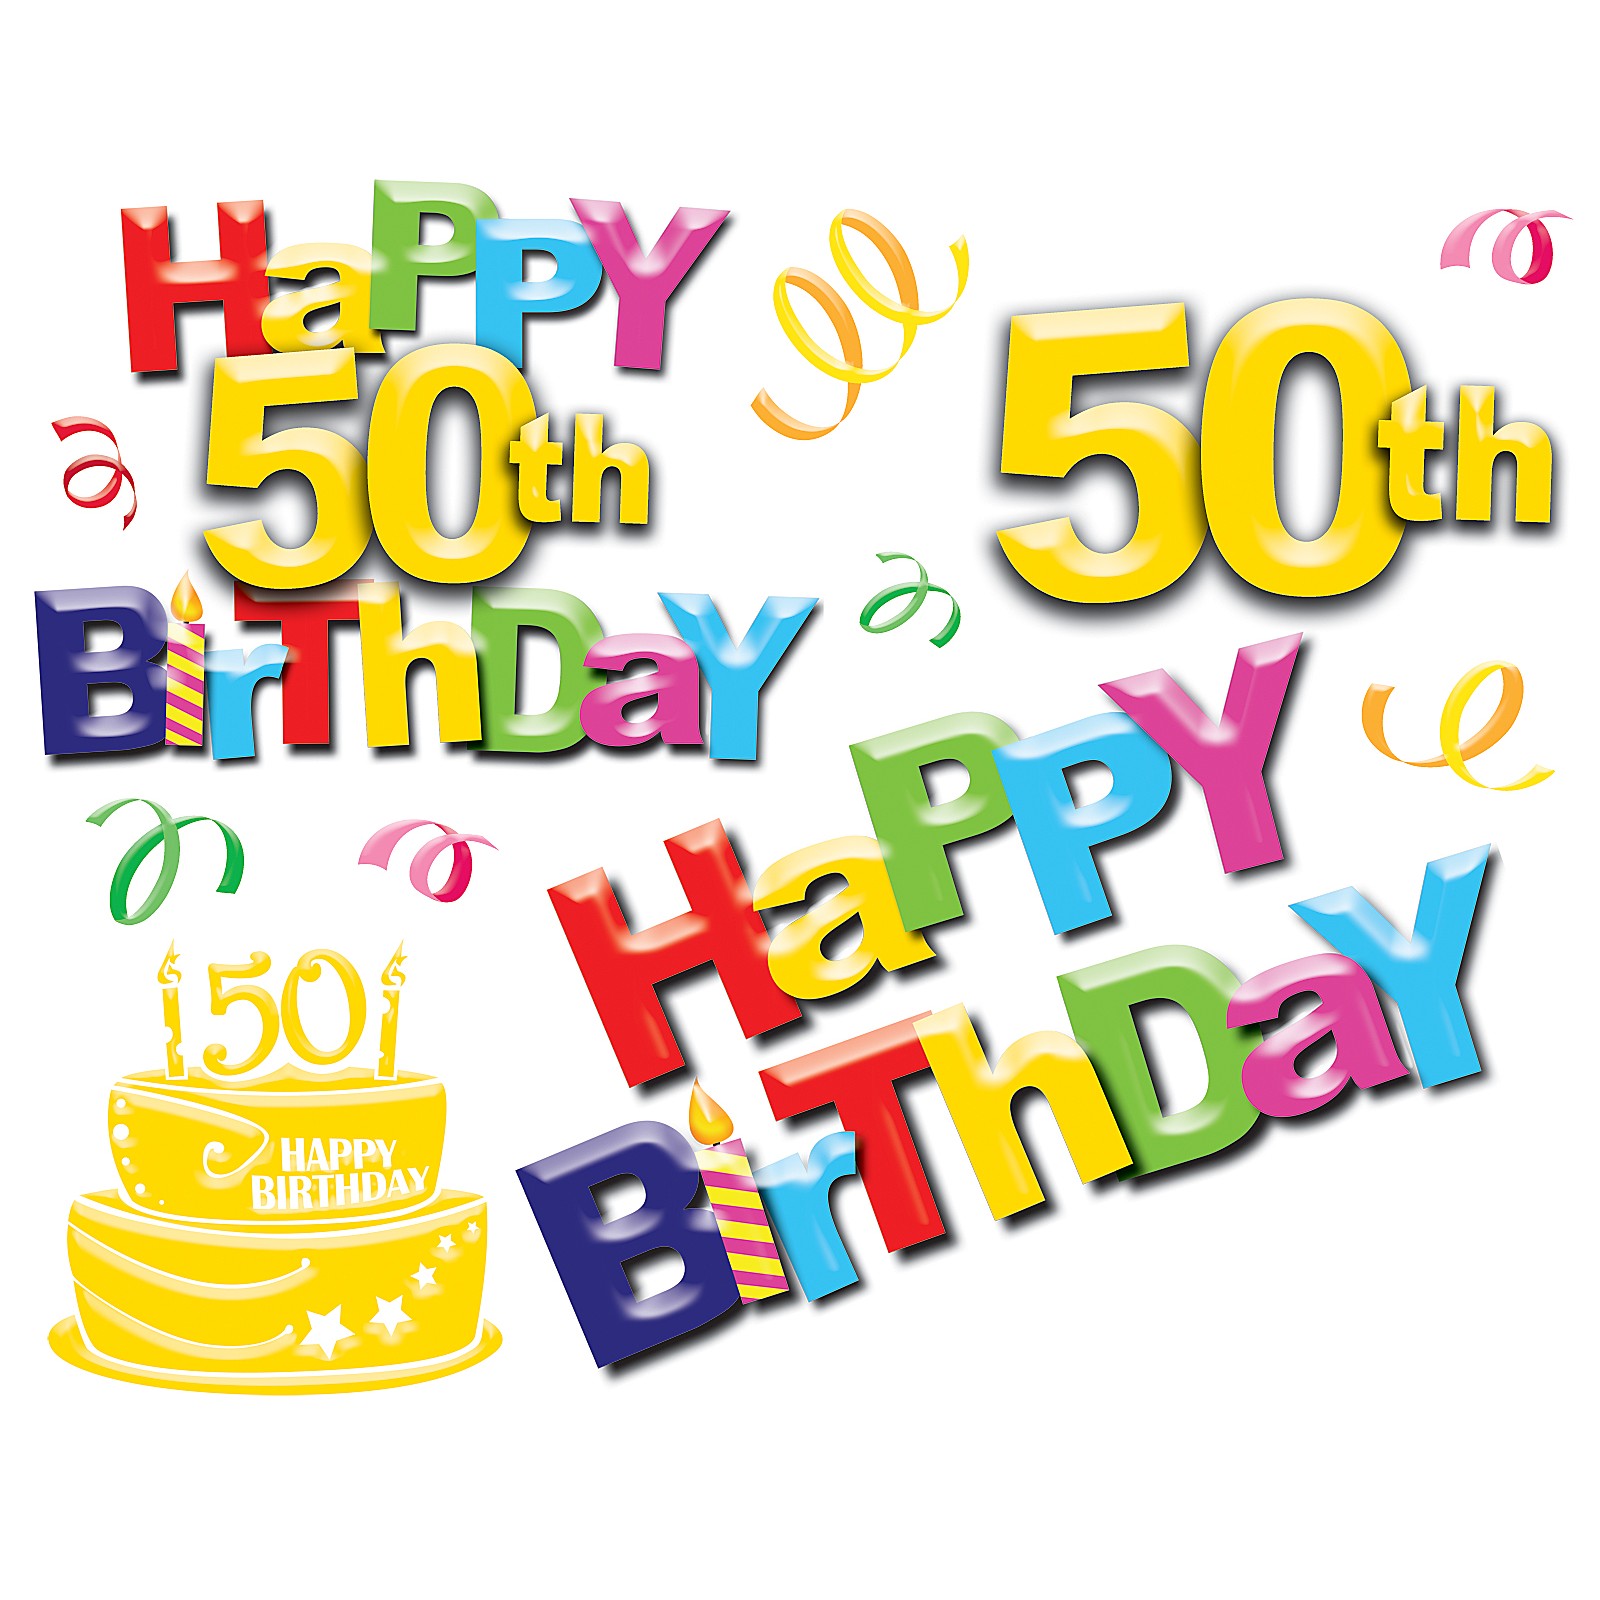 happy-50th-birthday-clip-art-cliparts-co